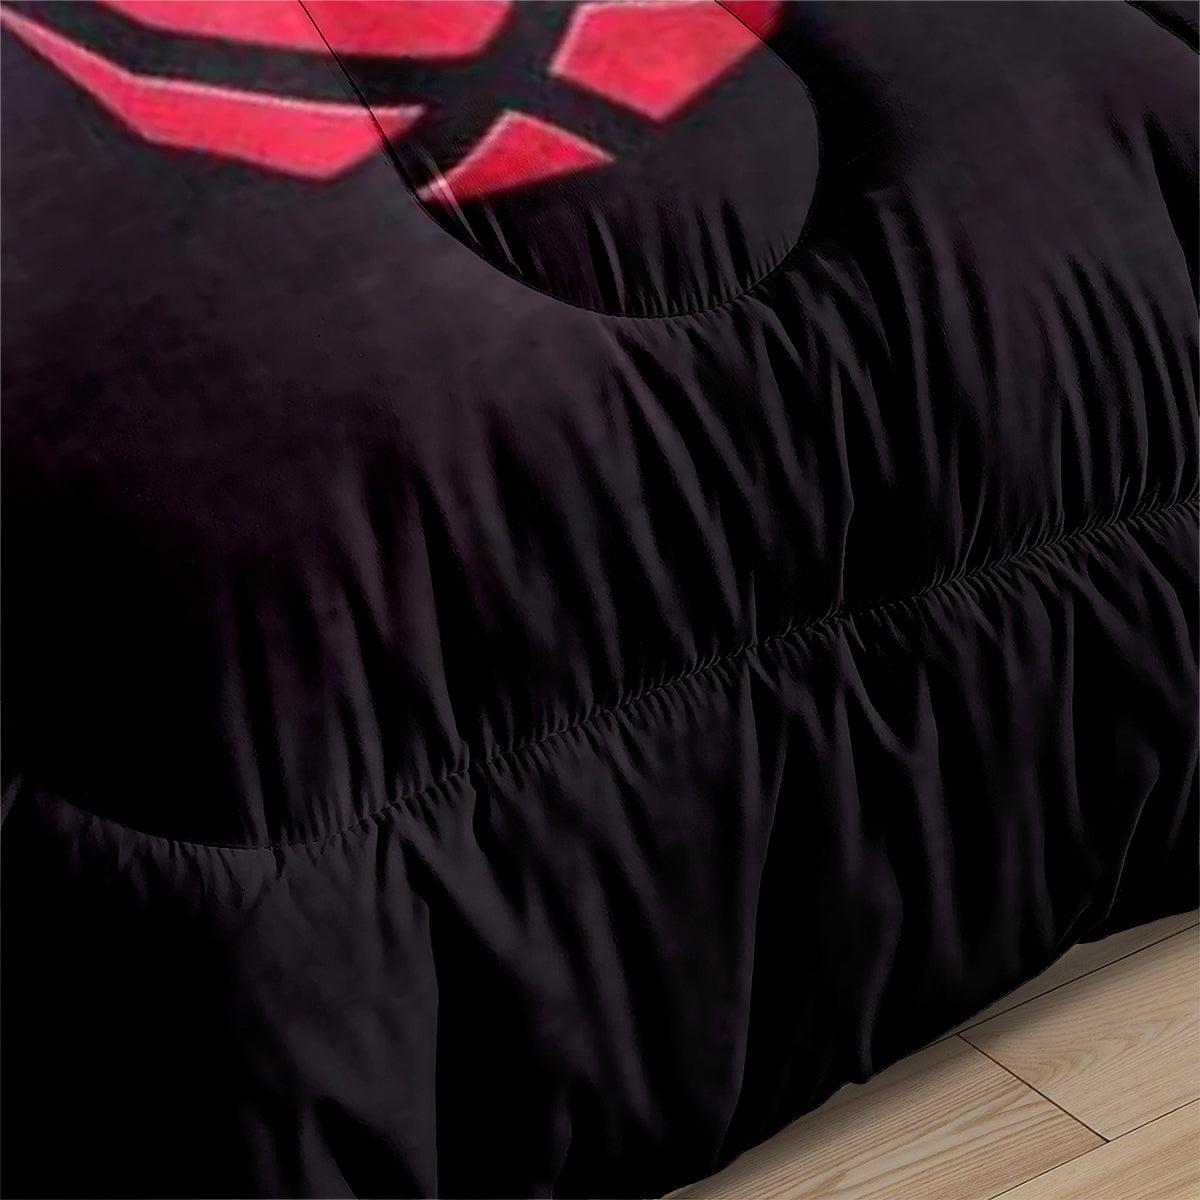 Toronto Basketball Raptors Comforter Pillowcases 3PC Sets Blanket All Season Reversible Quilted Duvet